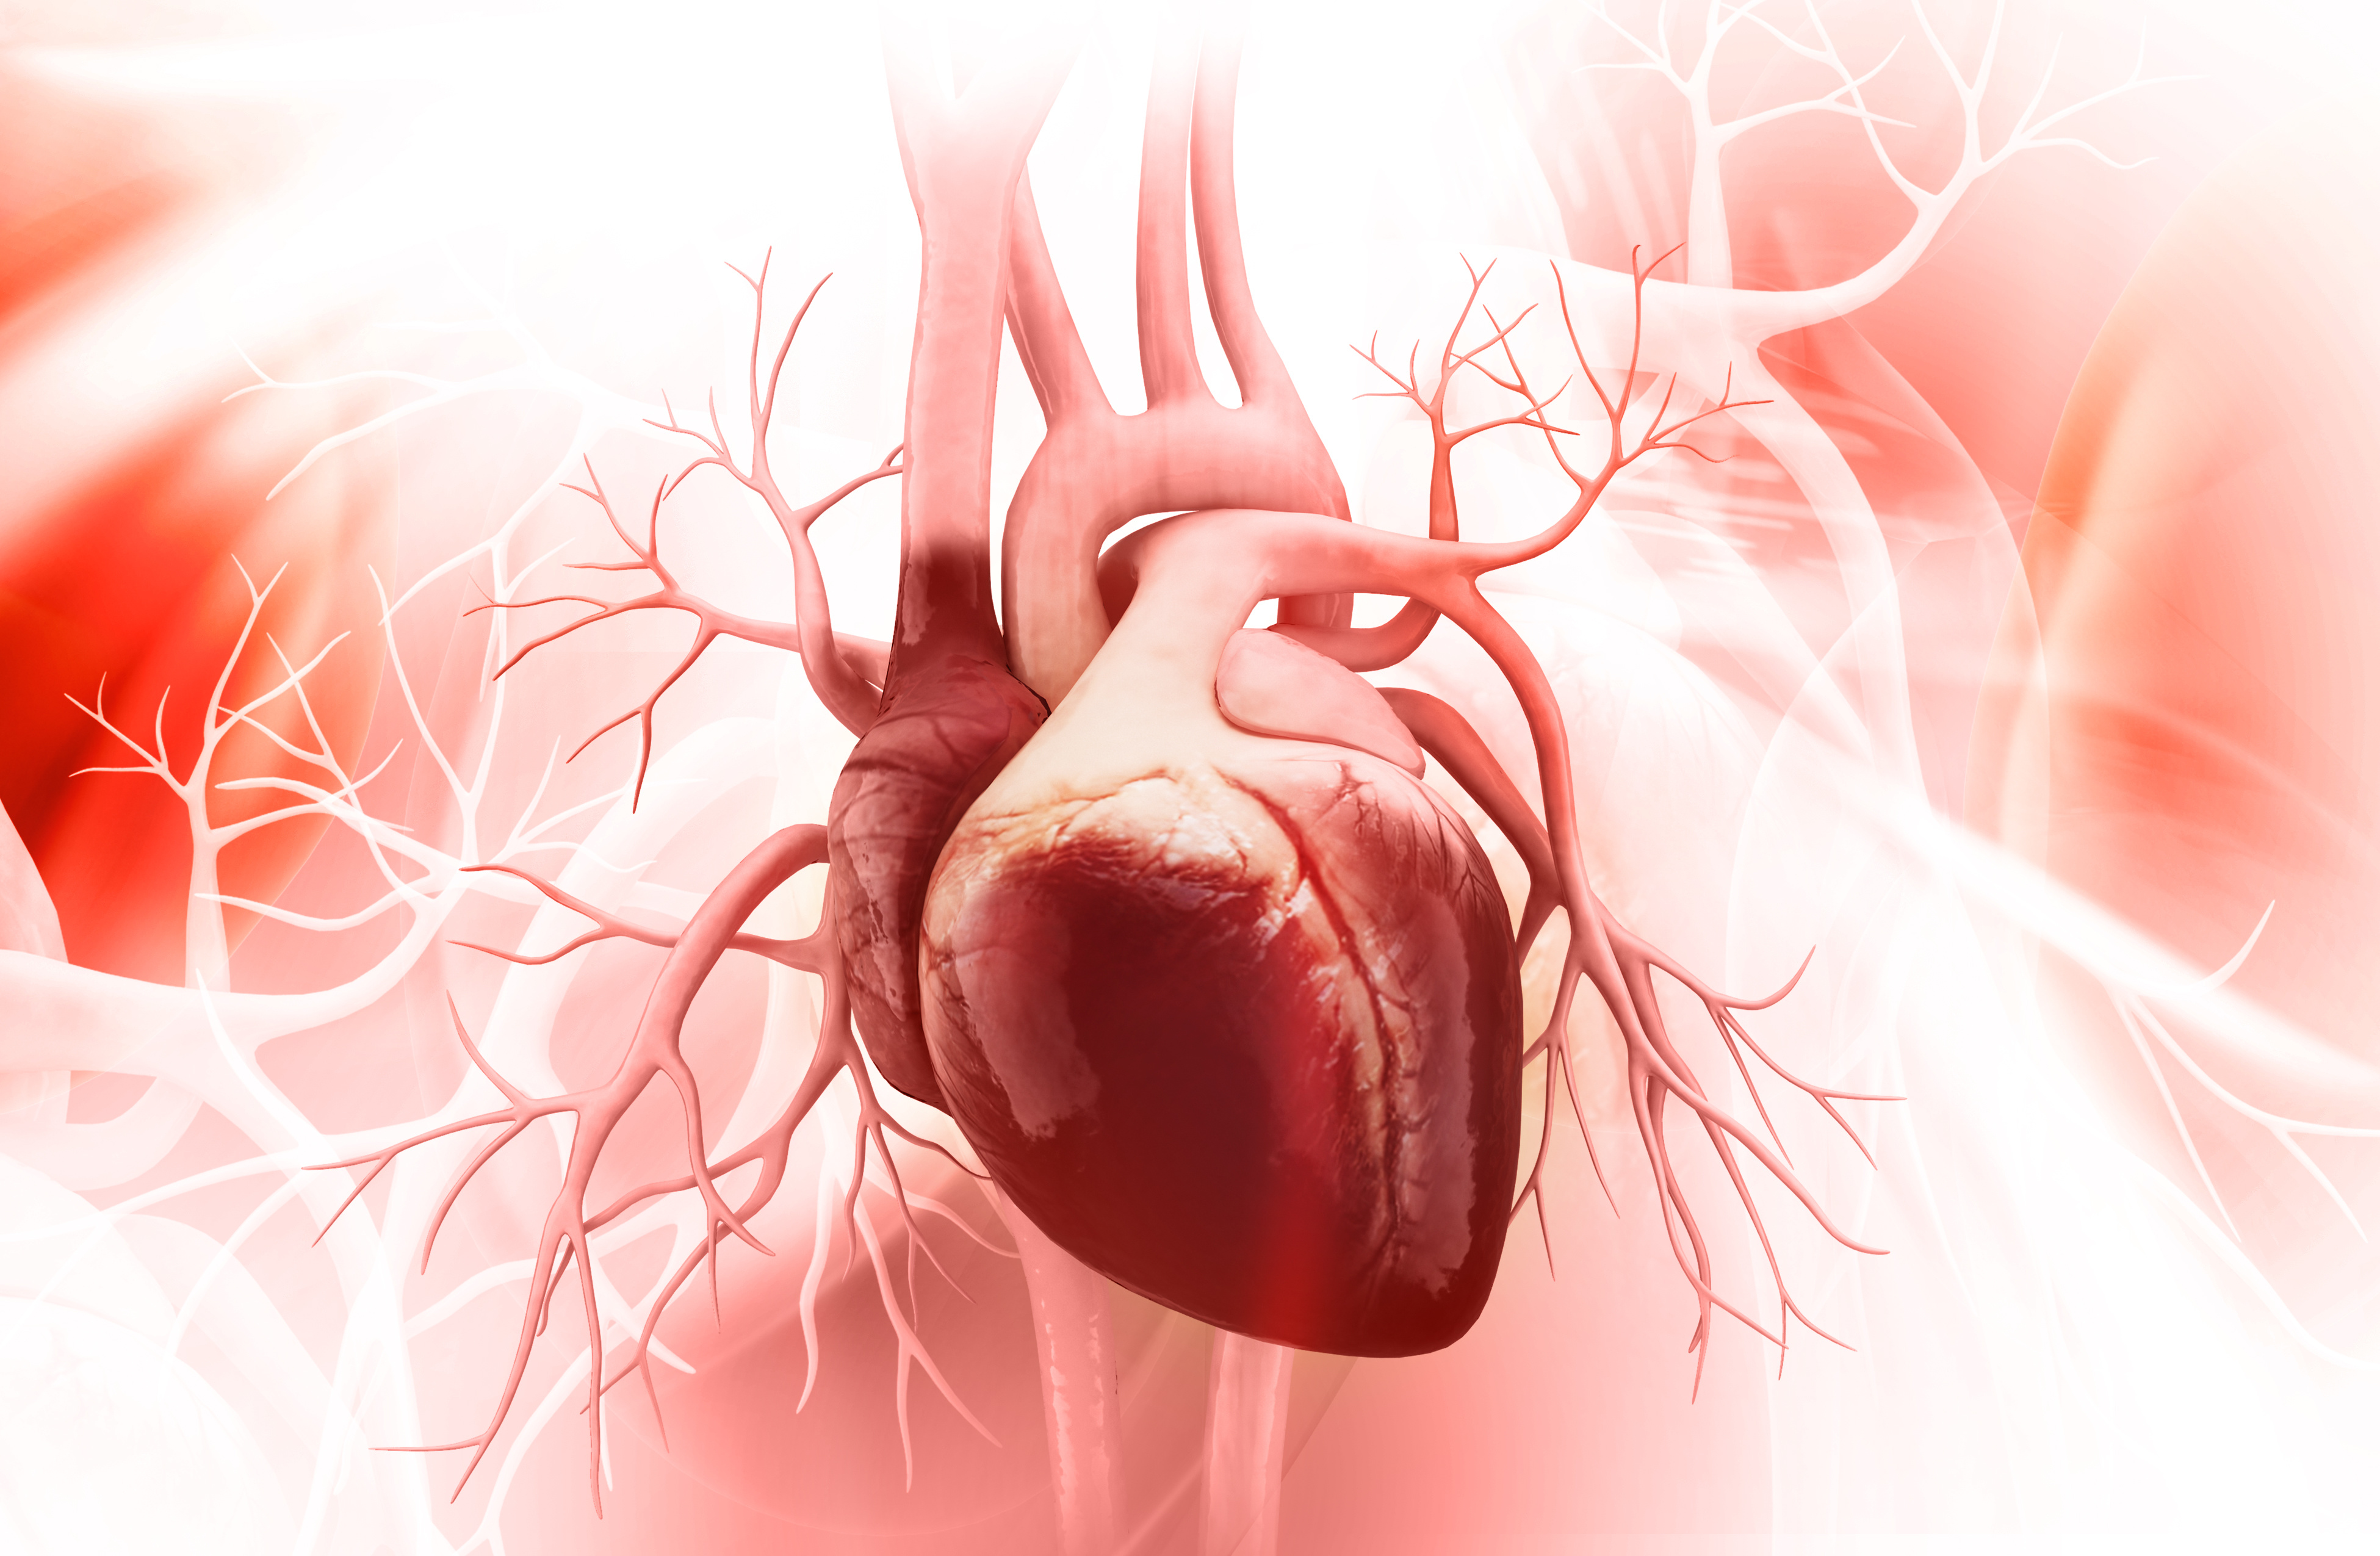 Human heart schematic